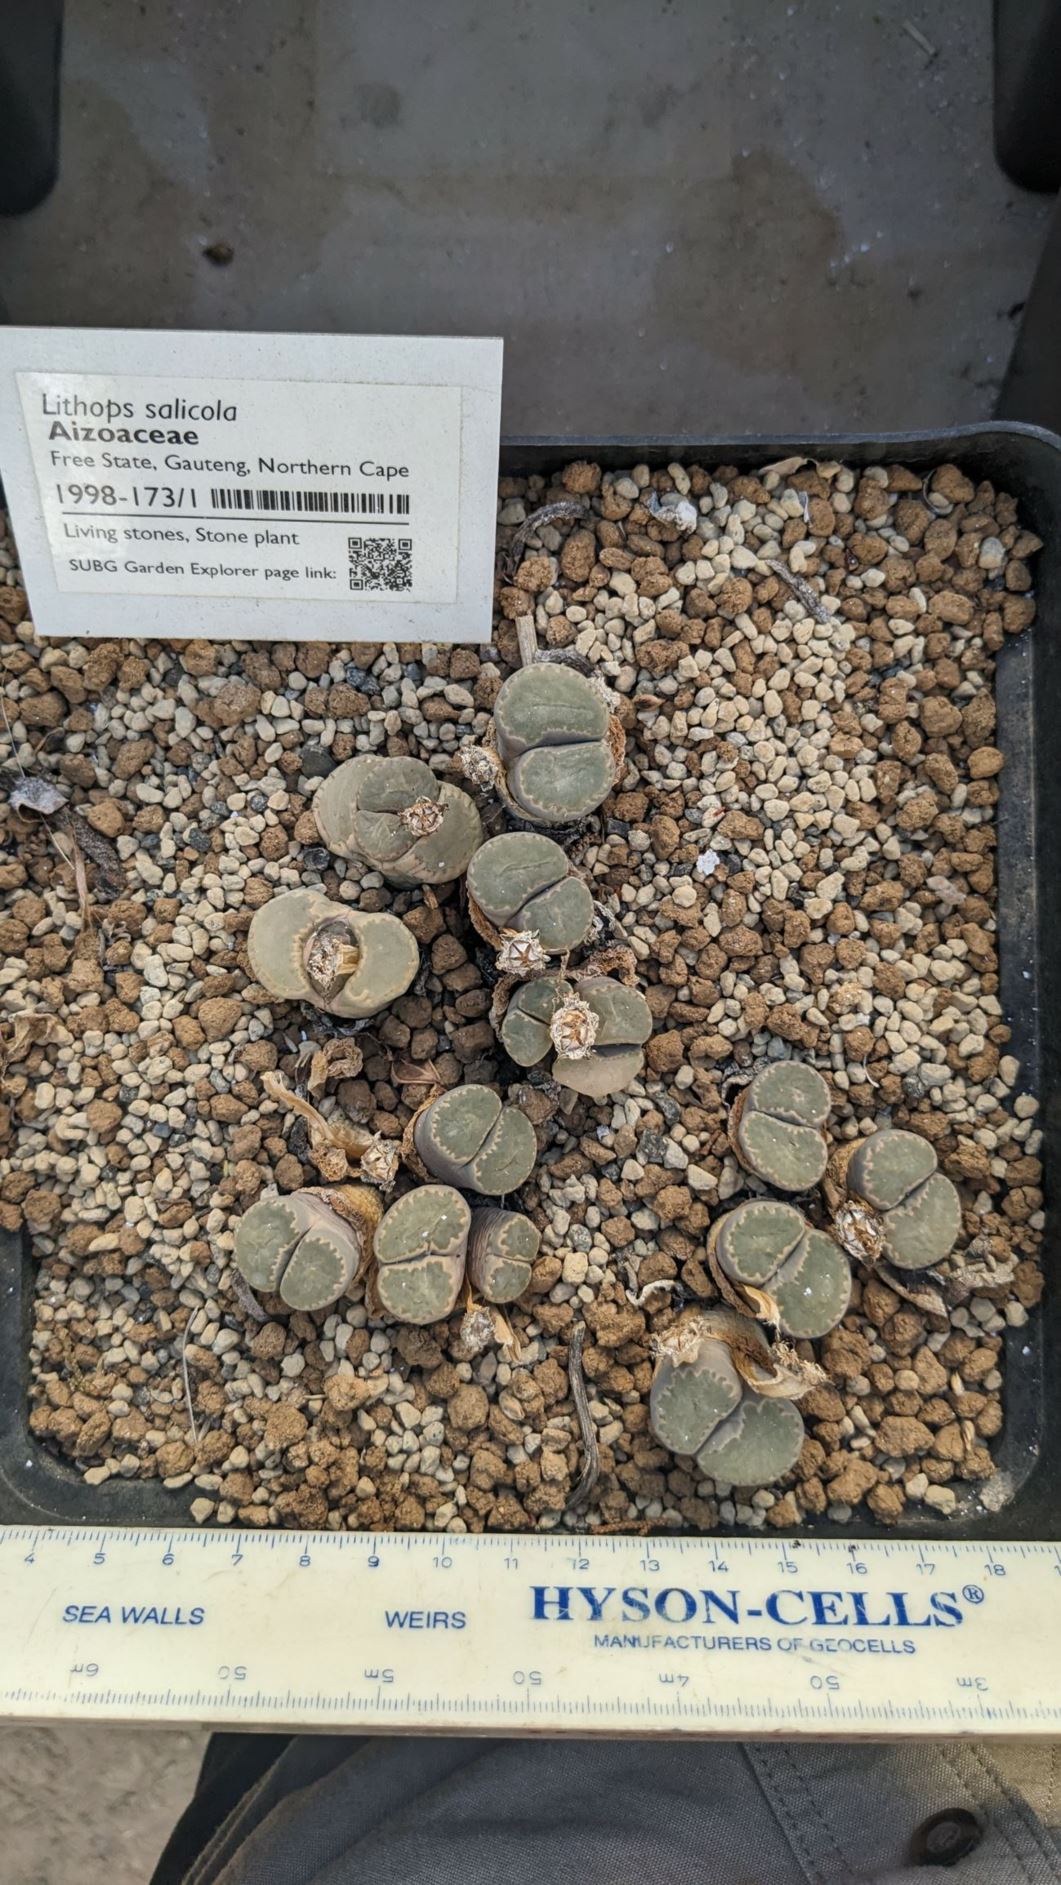 Lithops salicola - Beeskloutjies, Living stones, Stone plant